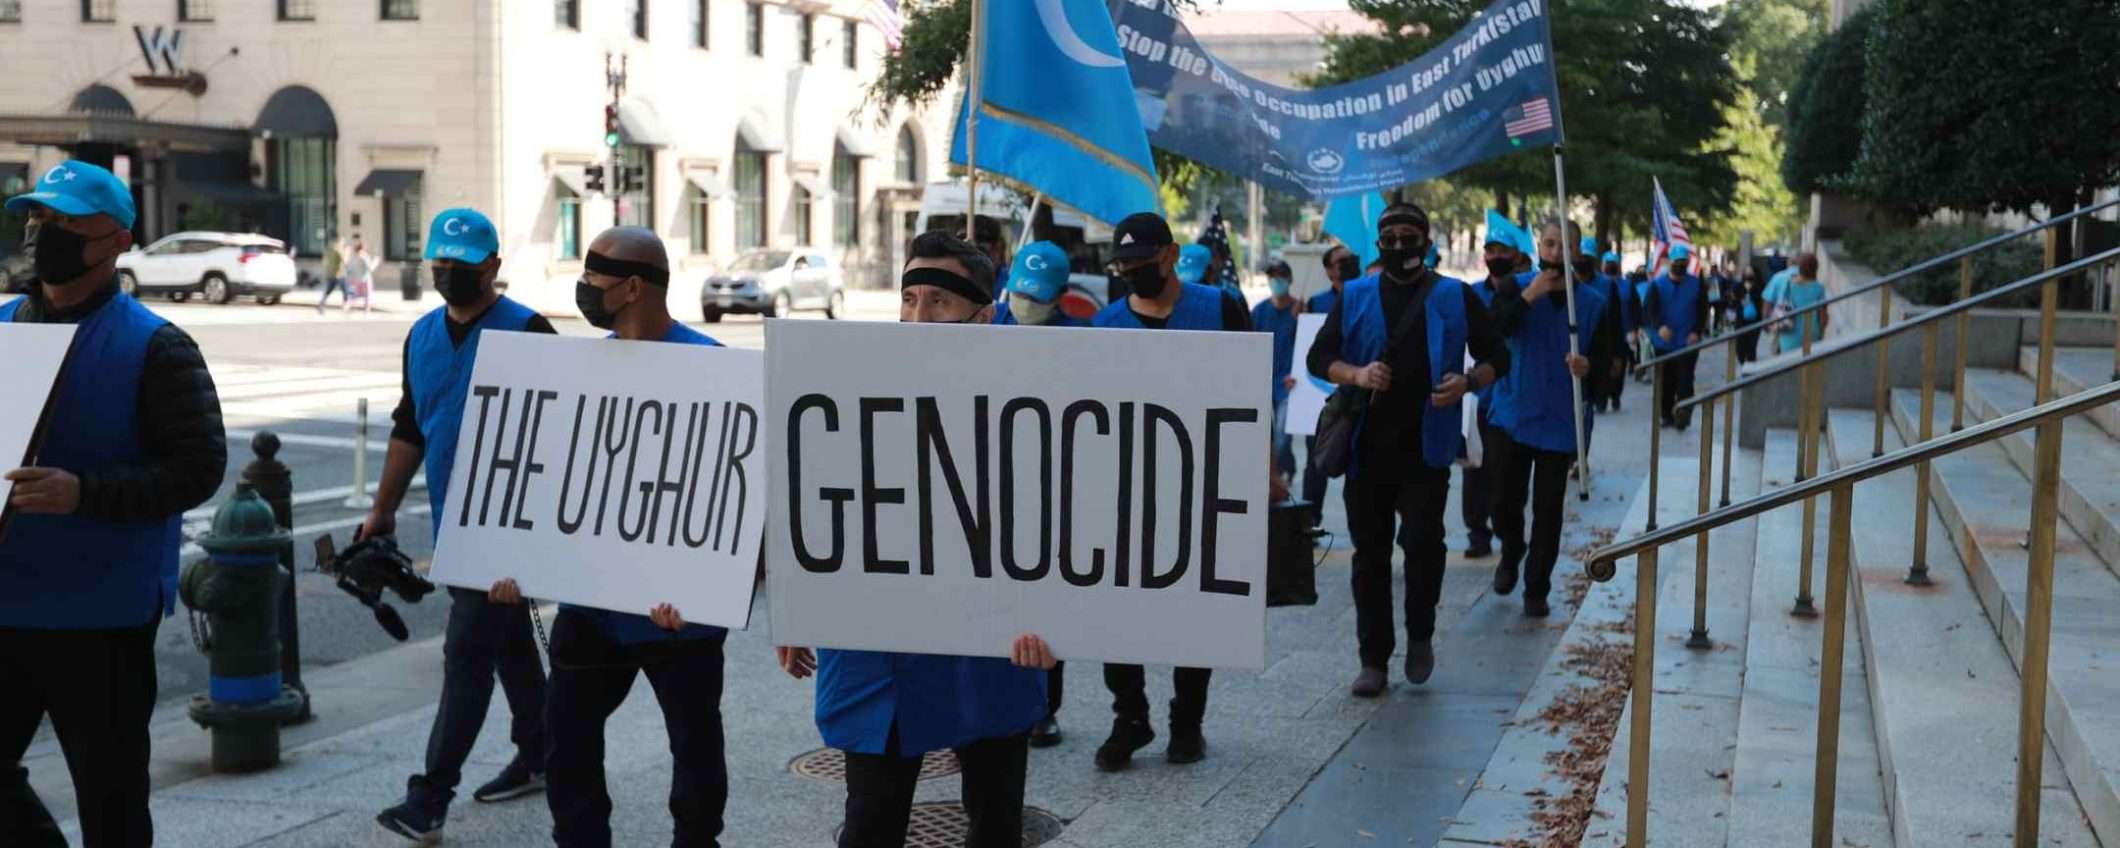 Facebook blocca attacchi contro dissidenti uiguri